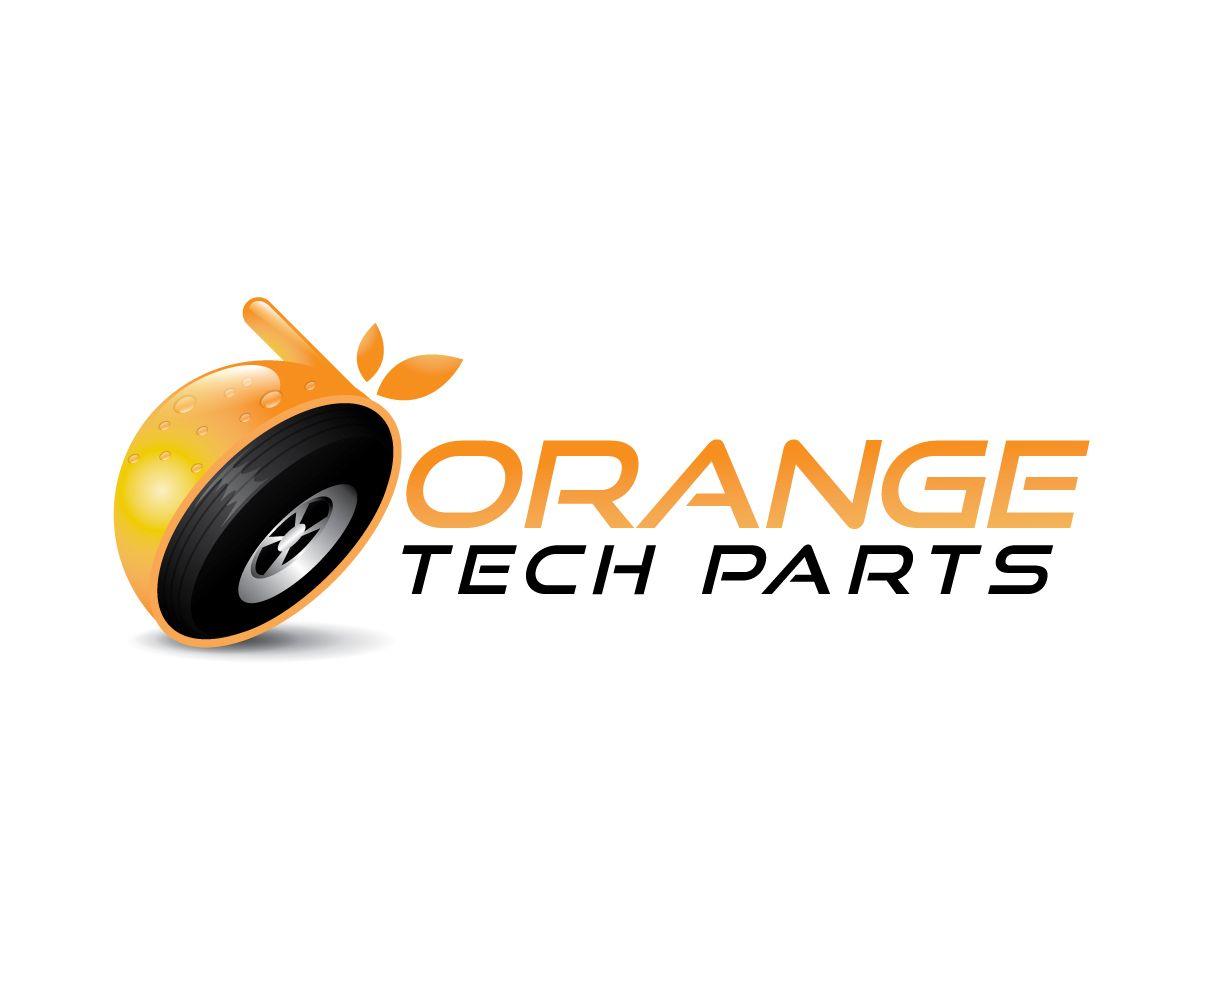 Orange Phone Logo - Cell Phone Logo Design for Orange Tech Parts